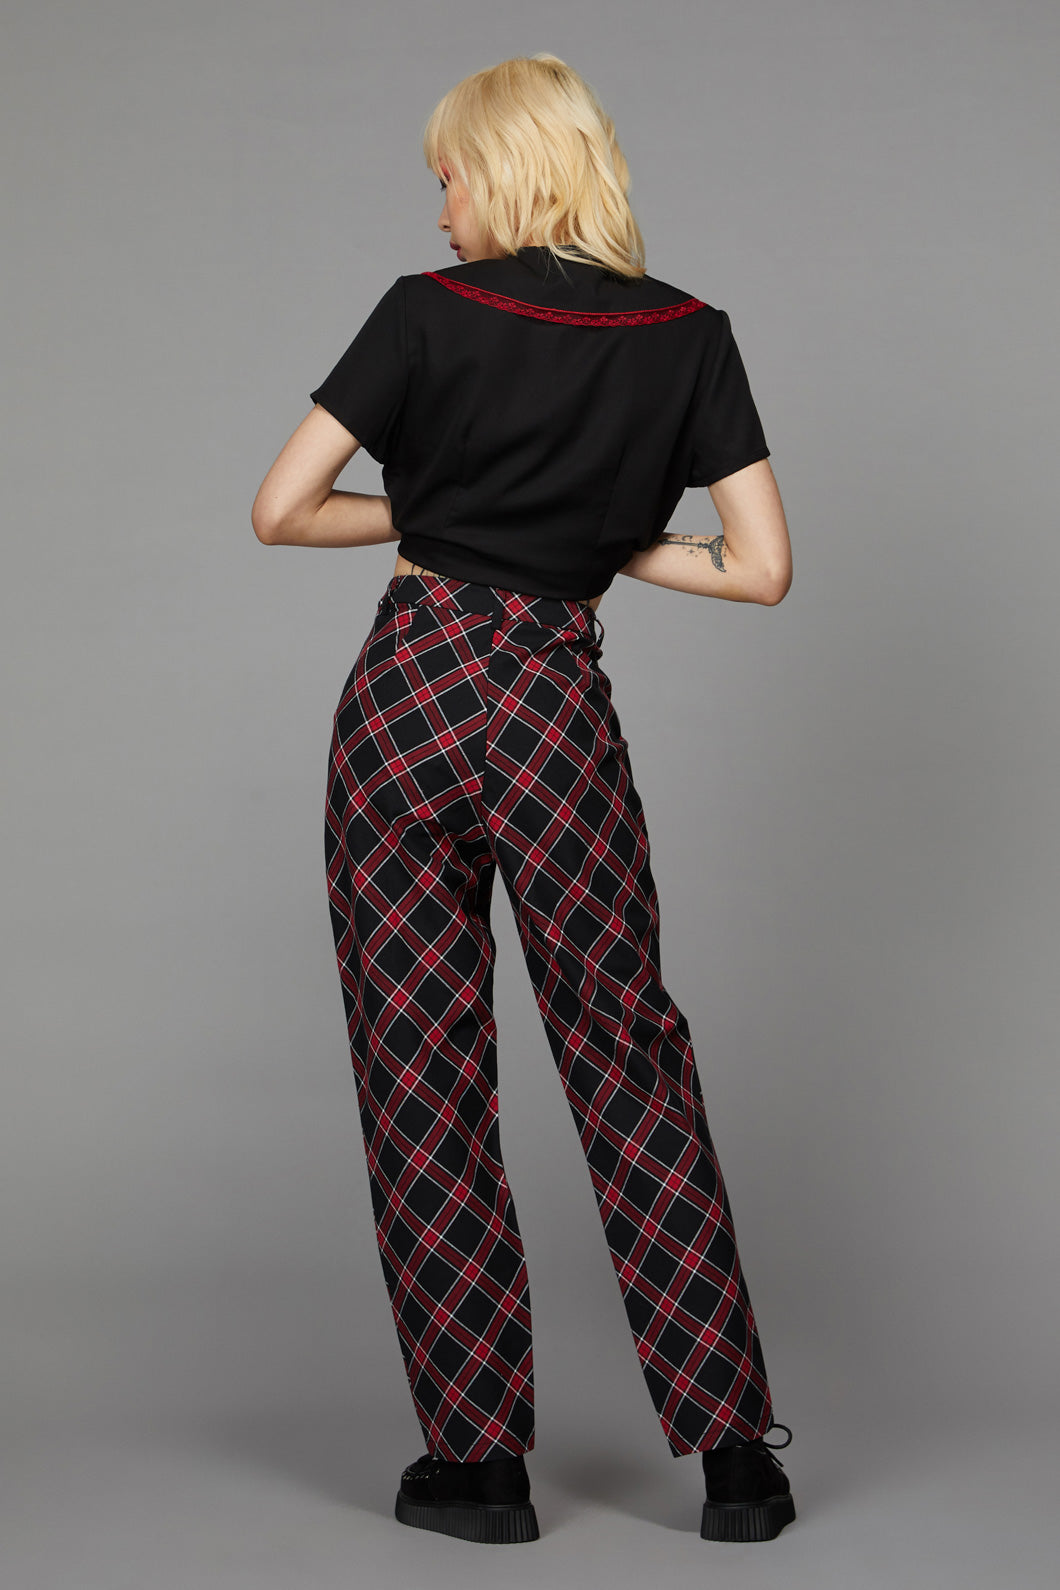 Fanvereka Family Matching Pajamas Sets Long Sleeve Pullover and Red Black  Plaid Pants  Walmartcom